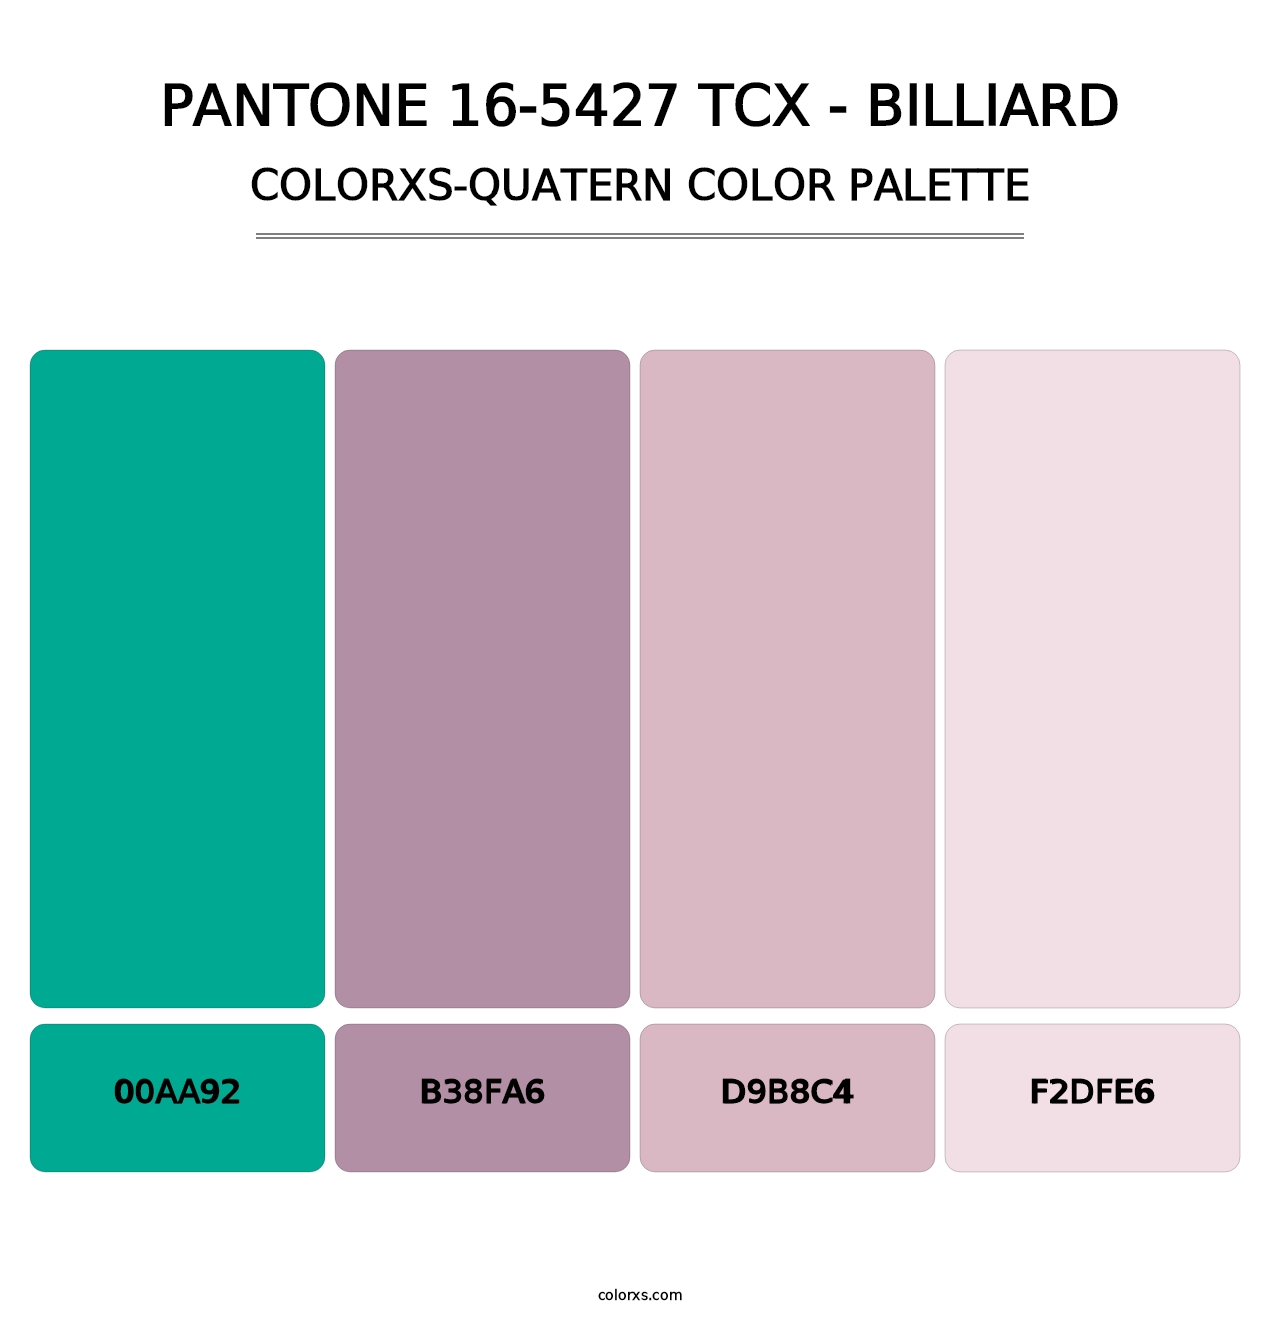 PANTONE 16-5427 TCX - Billiard - Colorxs Quatern Palette